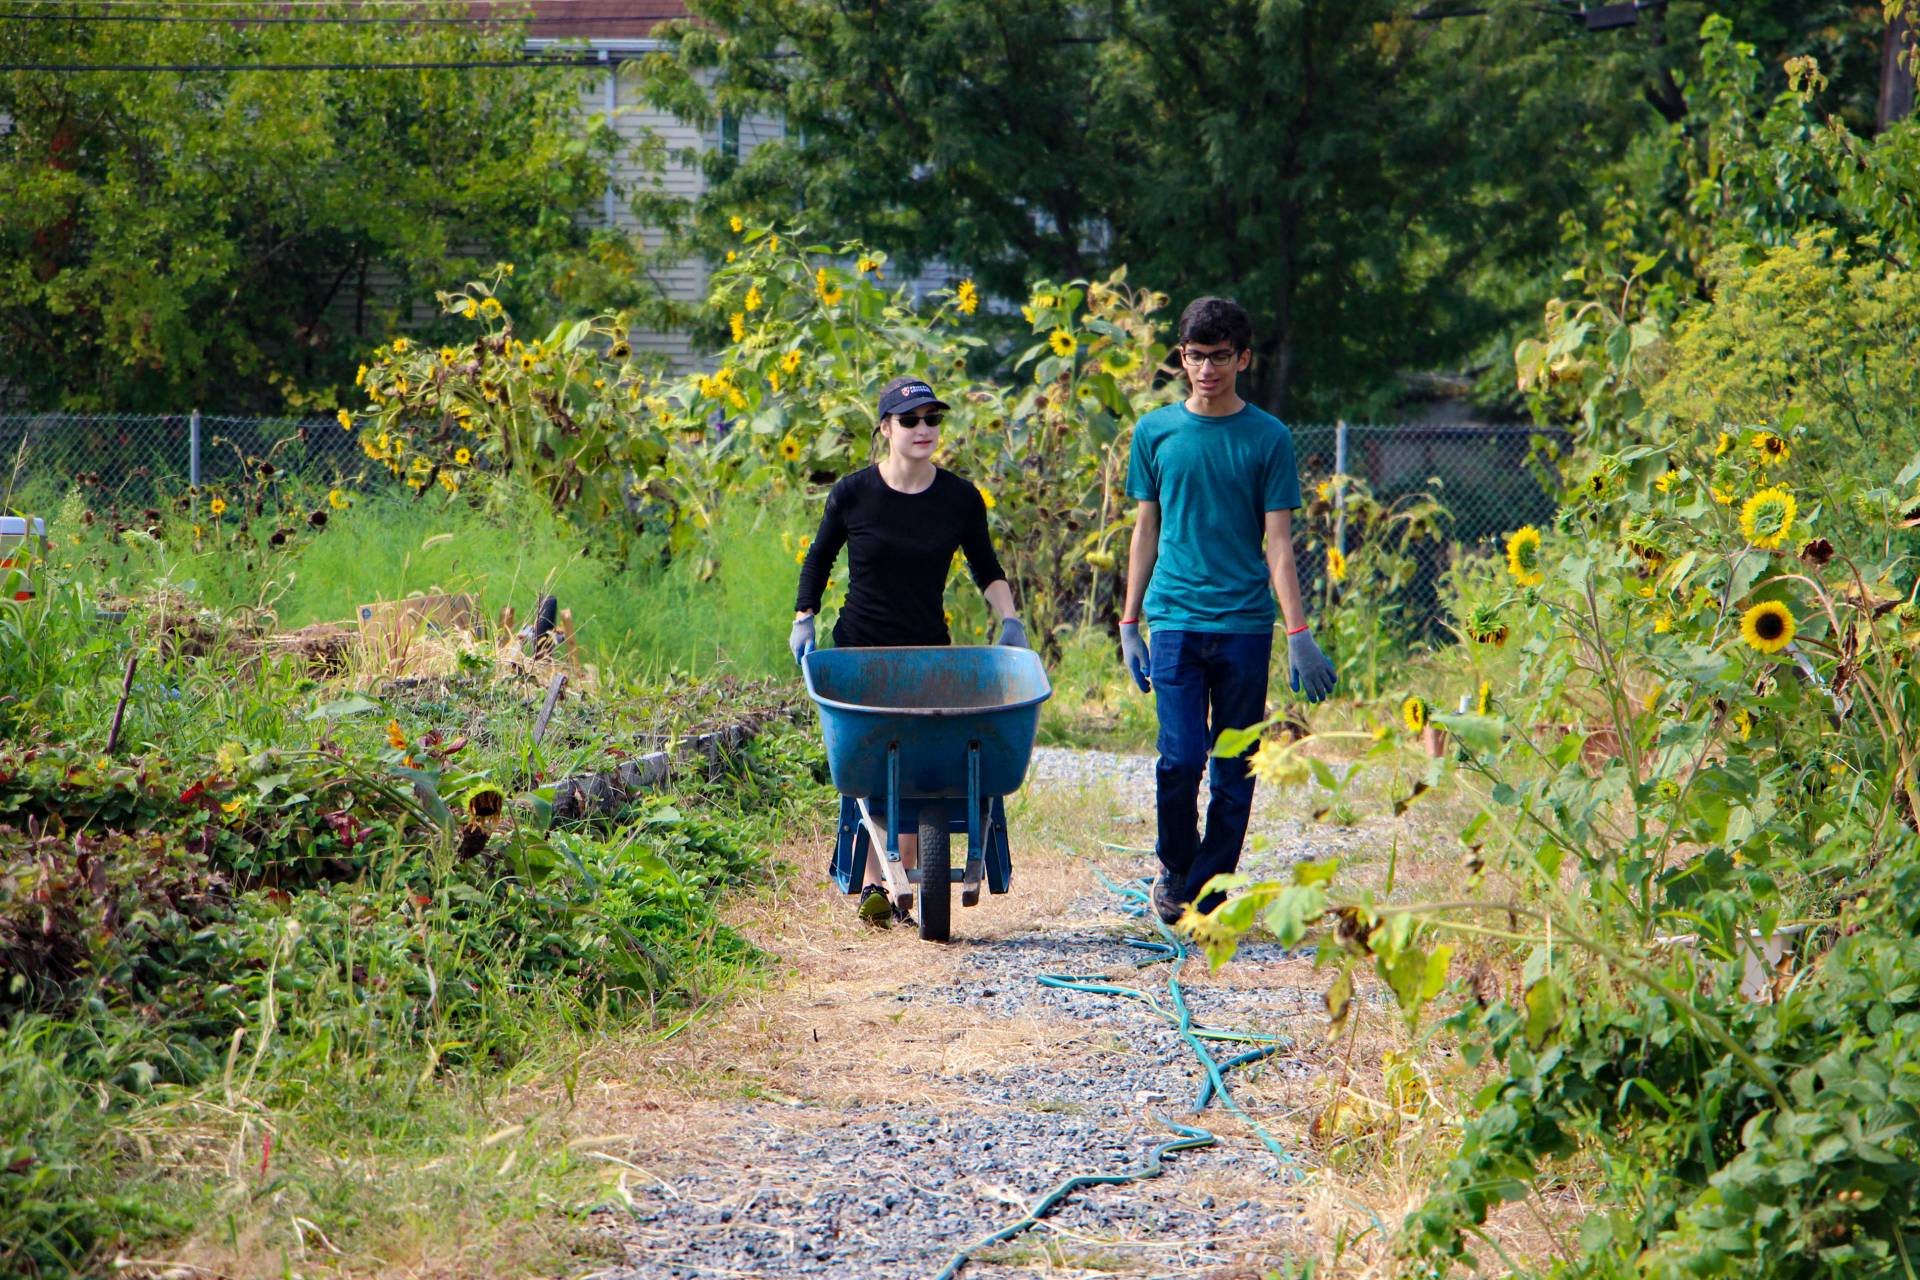 Students push wheelbarrow along path in urban farm plot